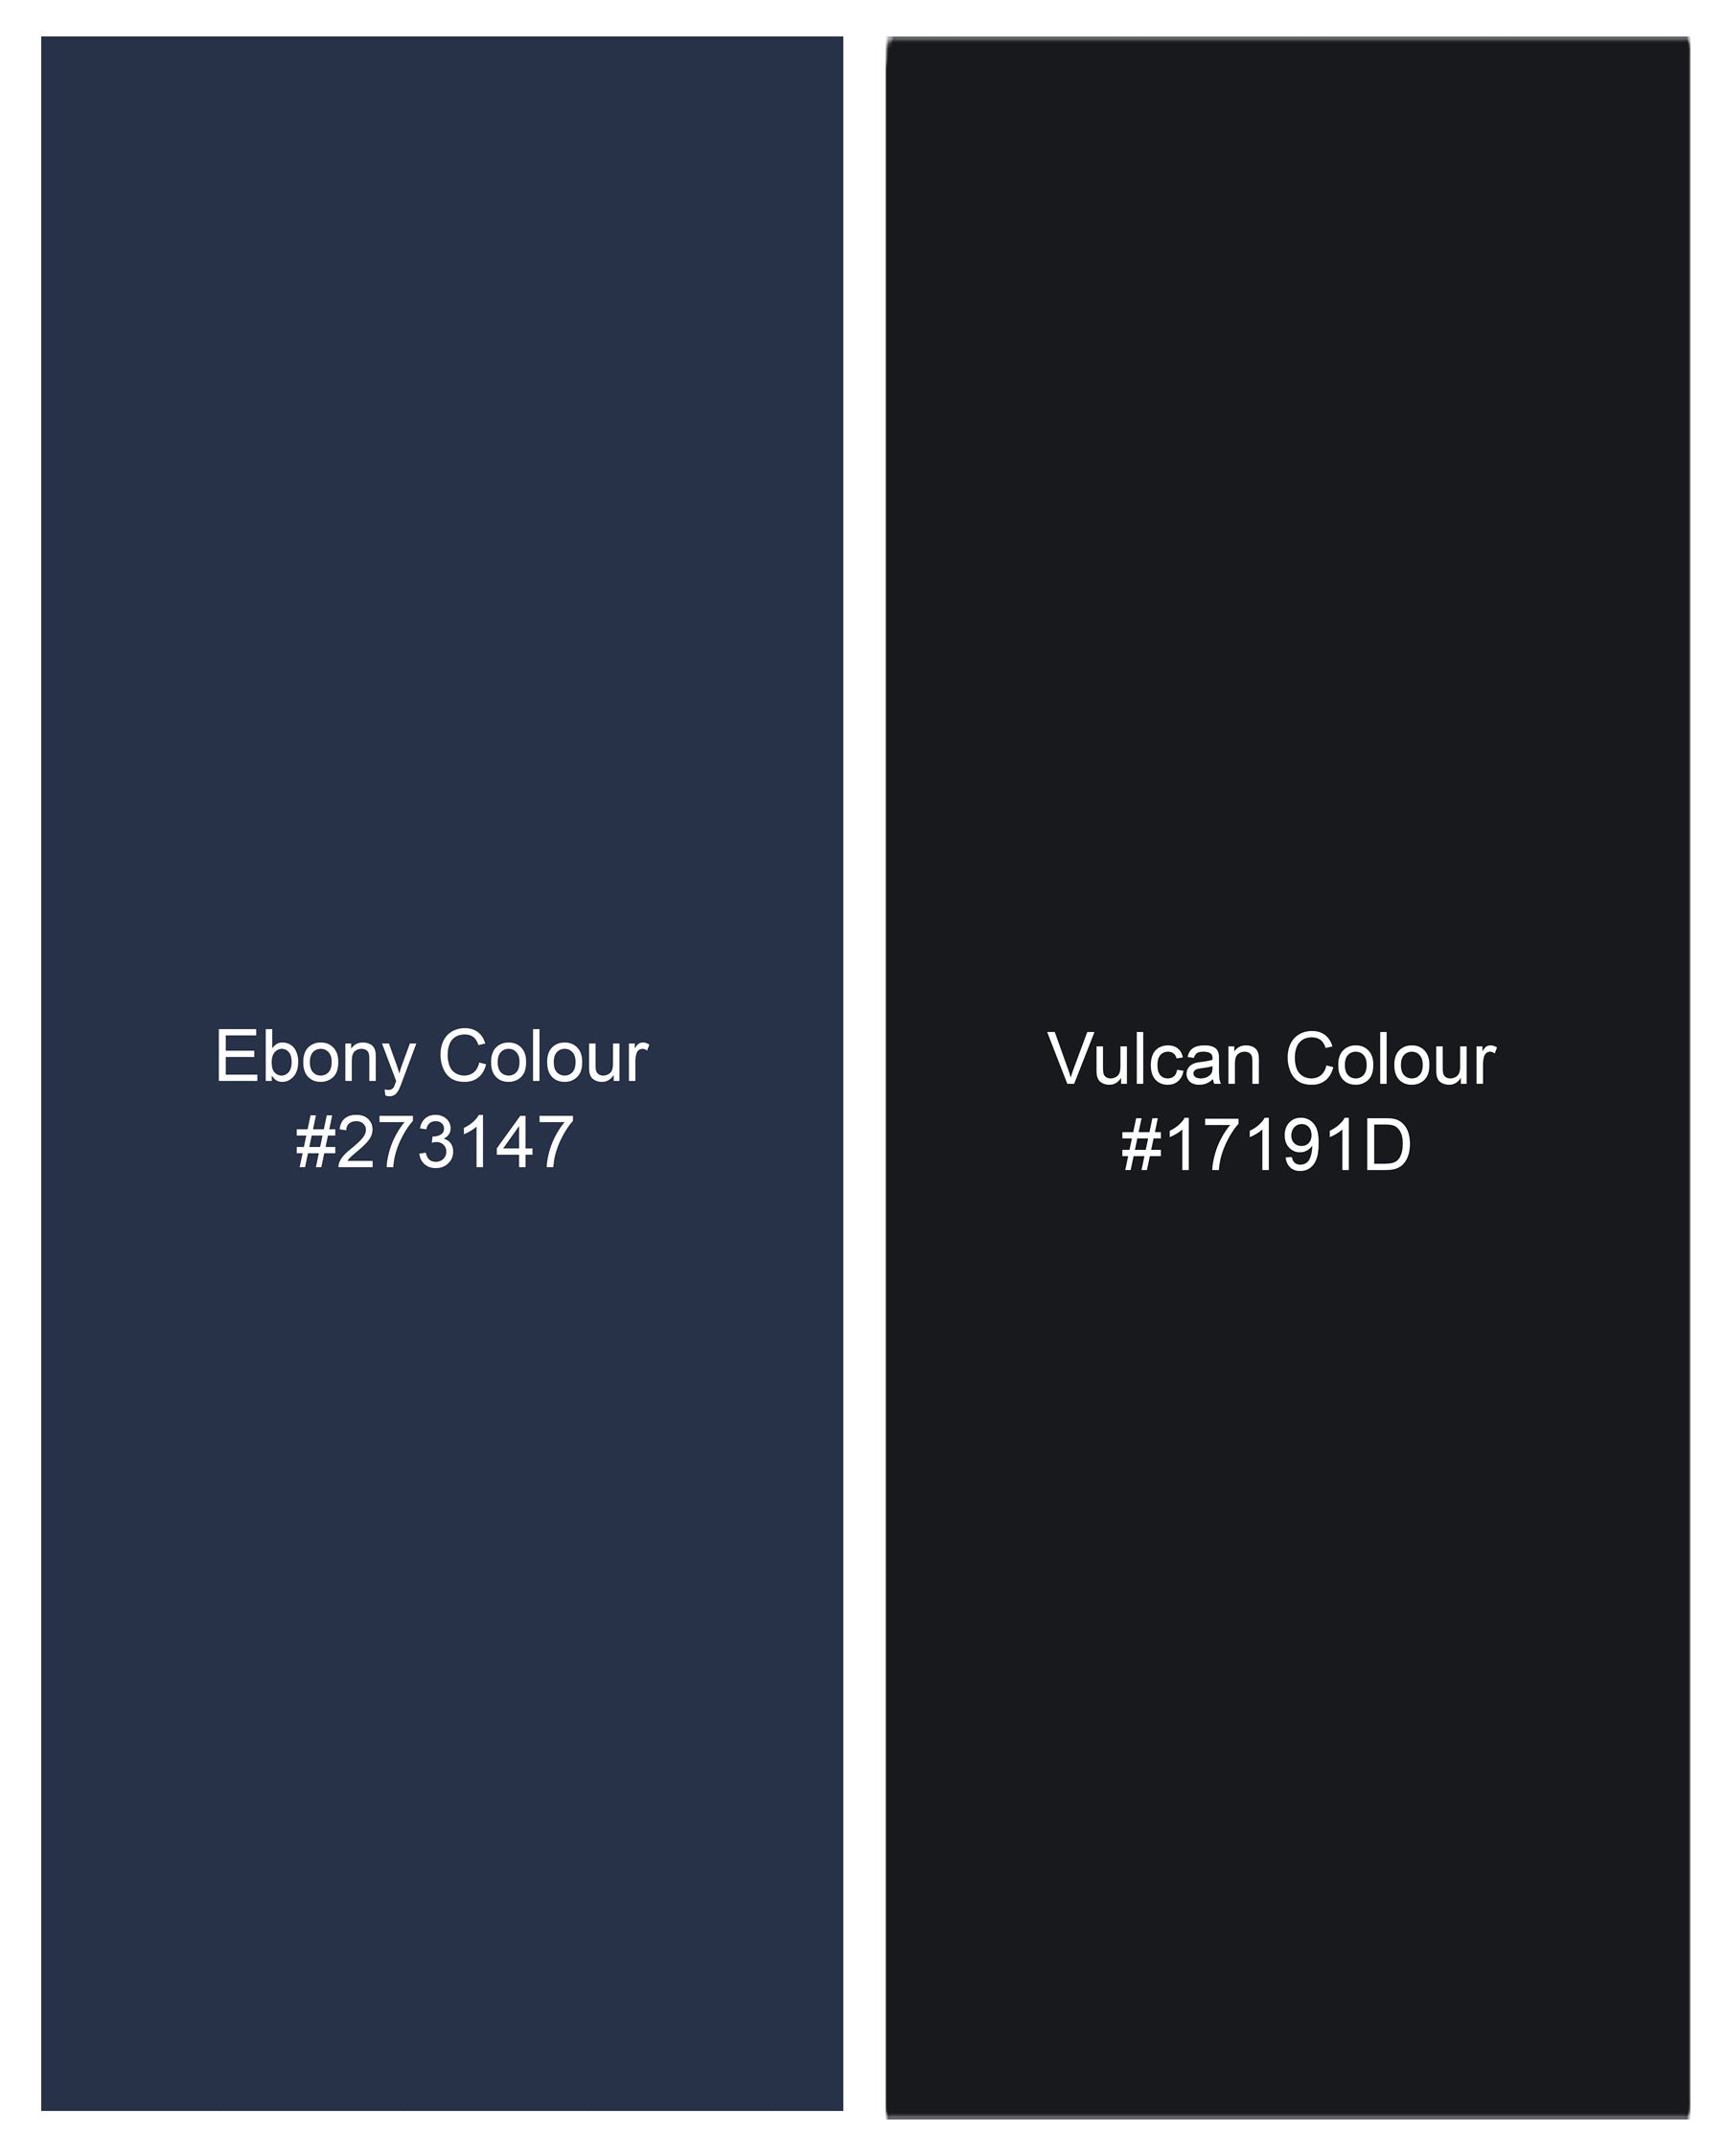 Ebony Navy Blue Vulcan Black Textured Nehru Jacket  WC2188-36, WC2188-38, WC2188-40, WC2188-42, WC2188-44, WC2188-46, WC2188-48, WC2188-50, WC2188-52, WC2188-54, WC2188-56, WC2188-58, WC2188-60